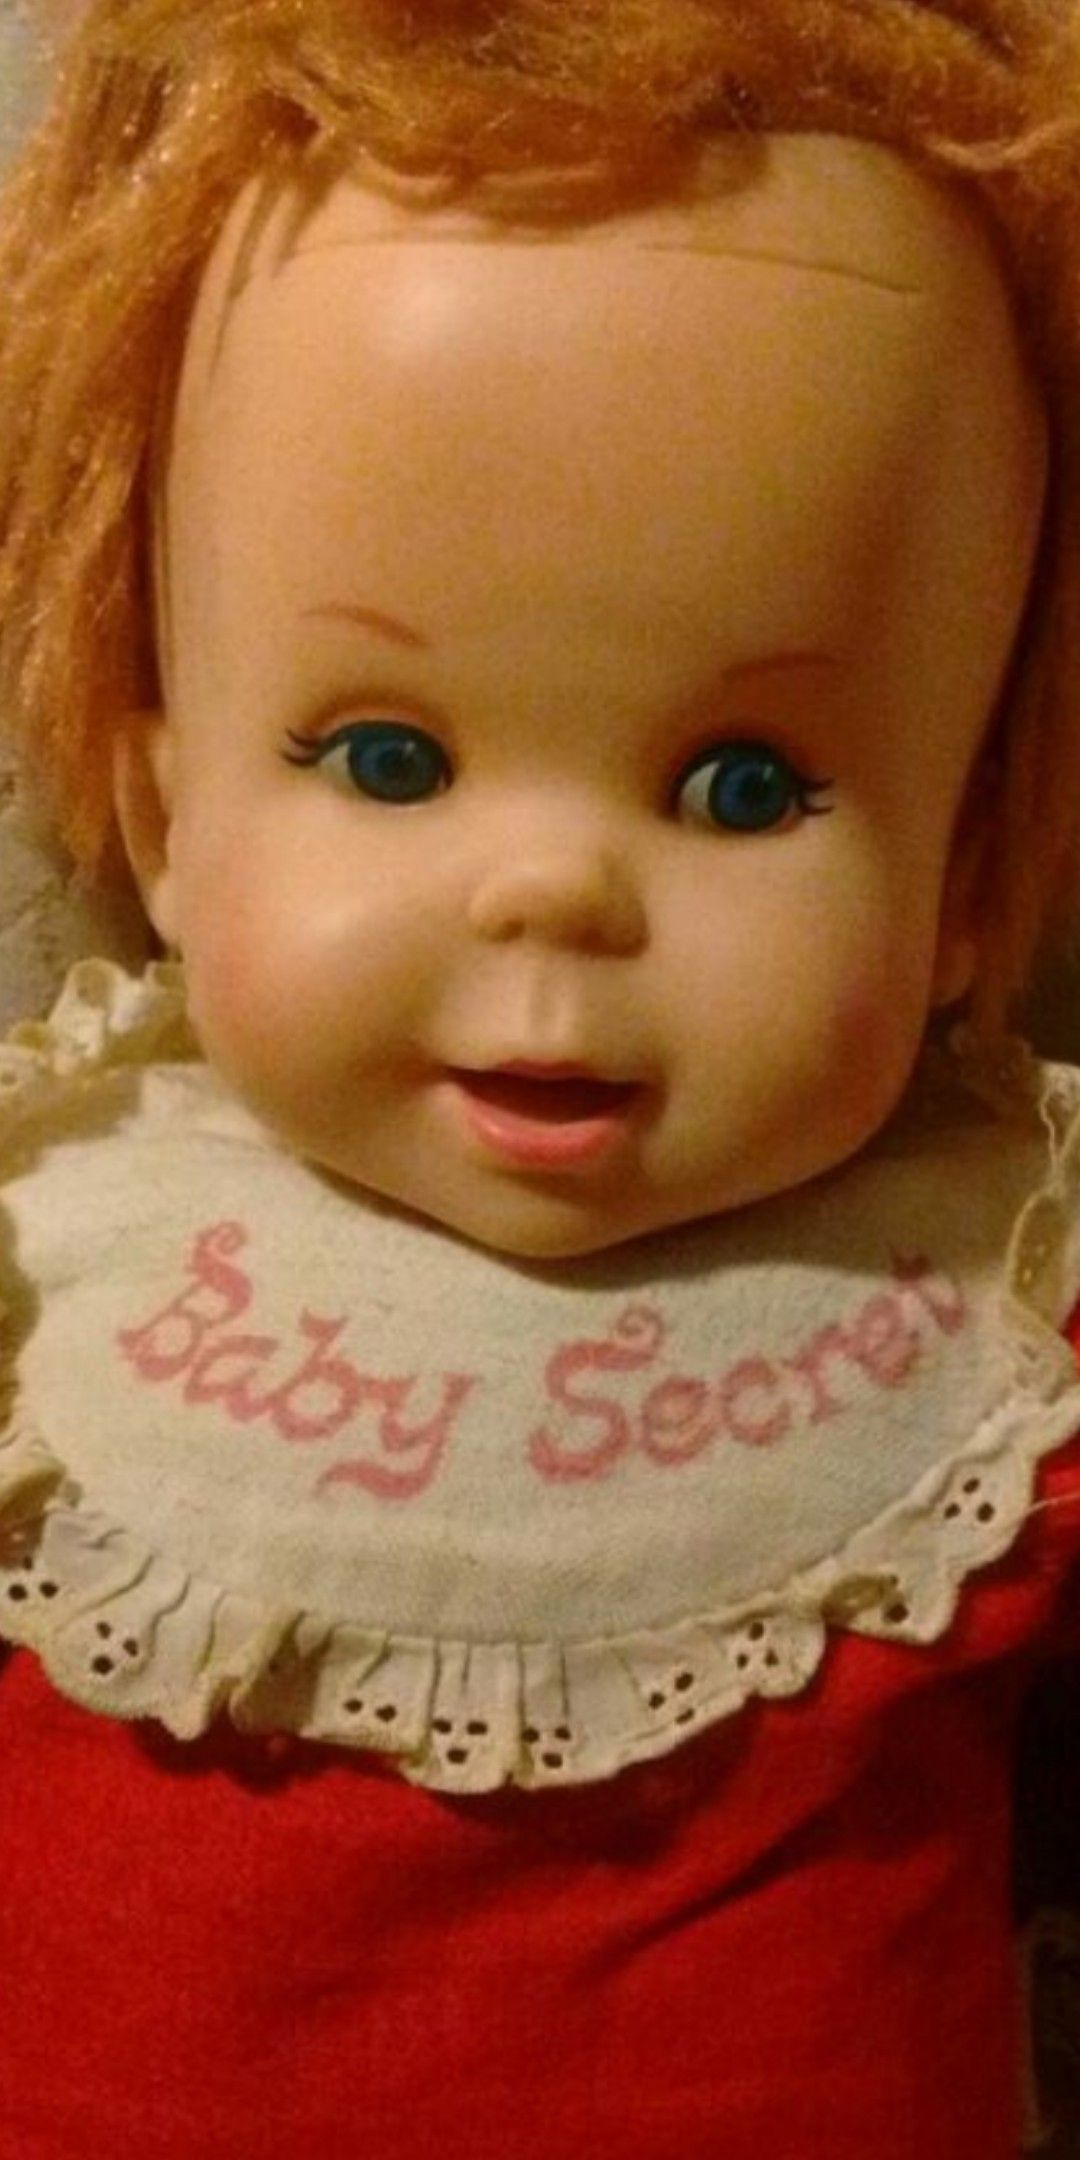 VTG original 1965 Mattel baby secret doll